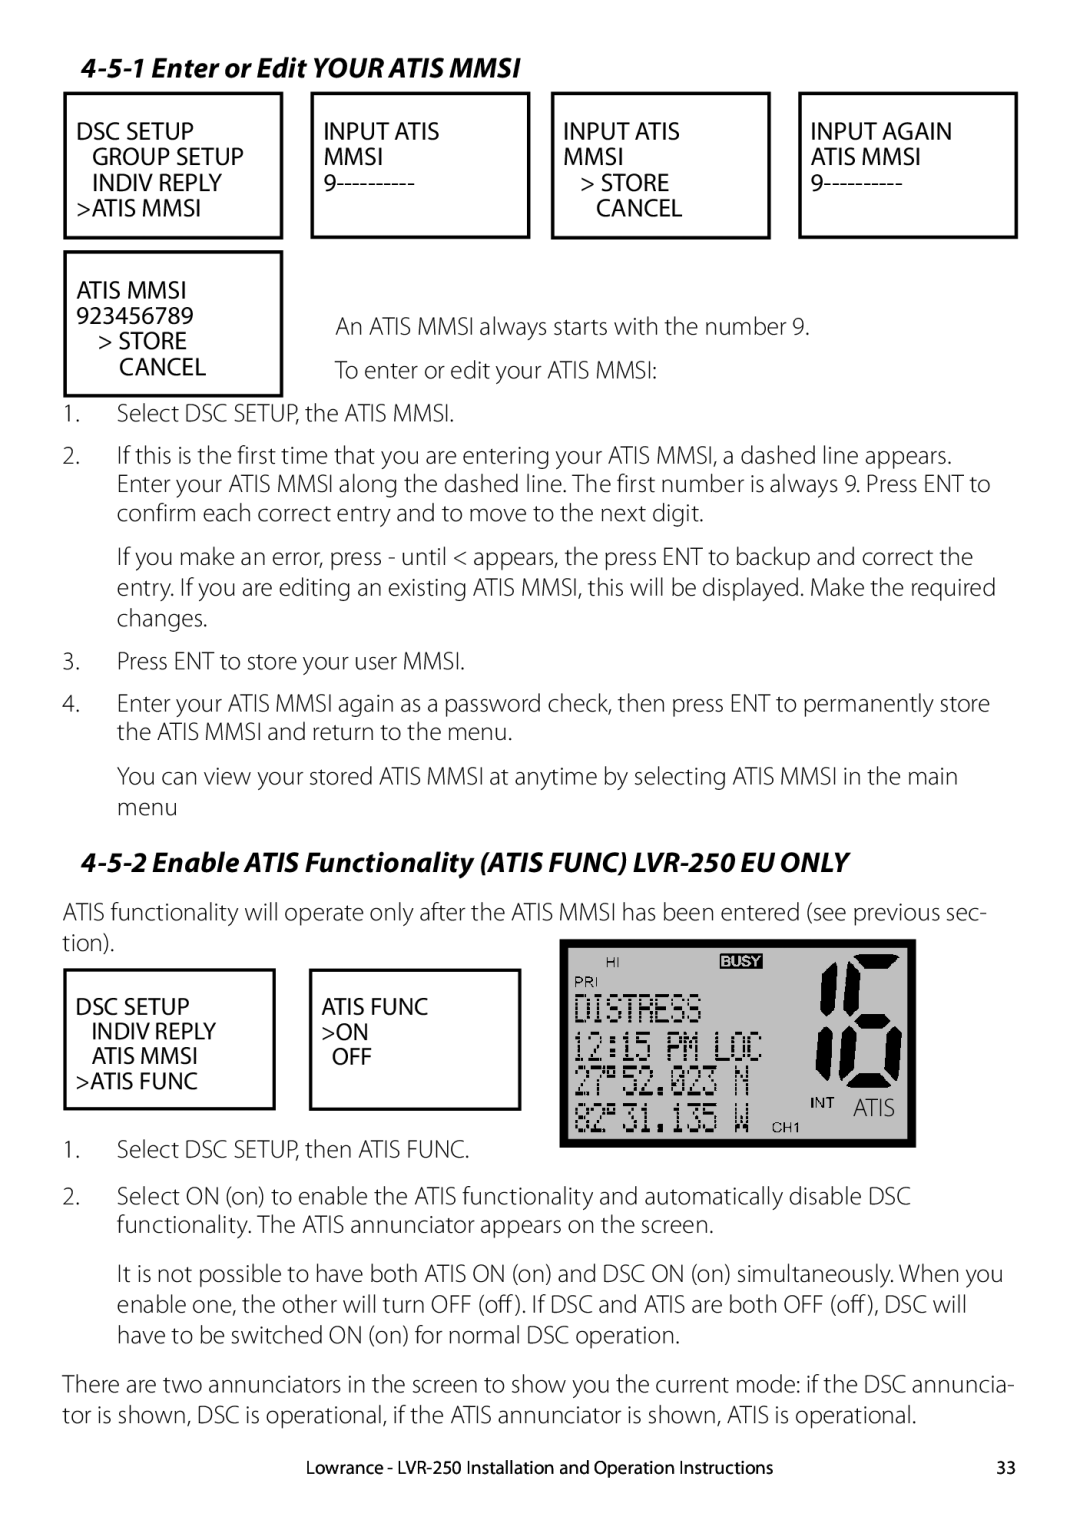 Lowrance electronic LVR-250 manual 4-5-1Enter or Edit YOUR ATIS MMSI 